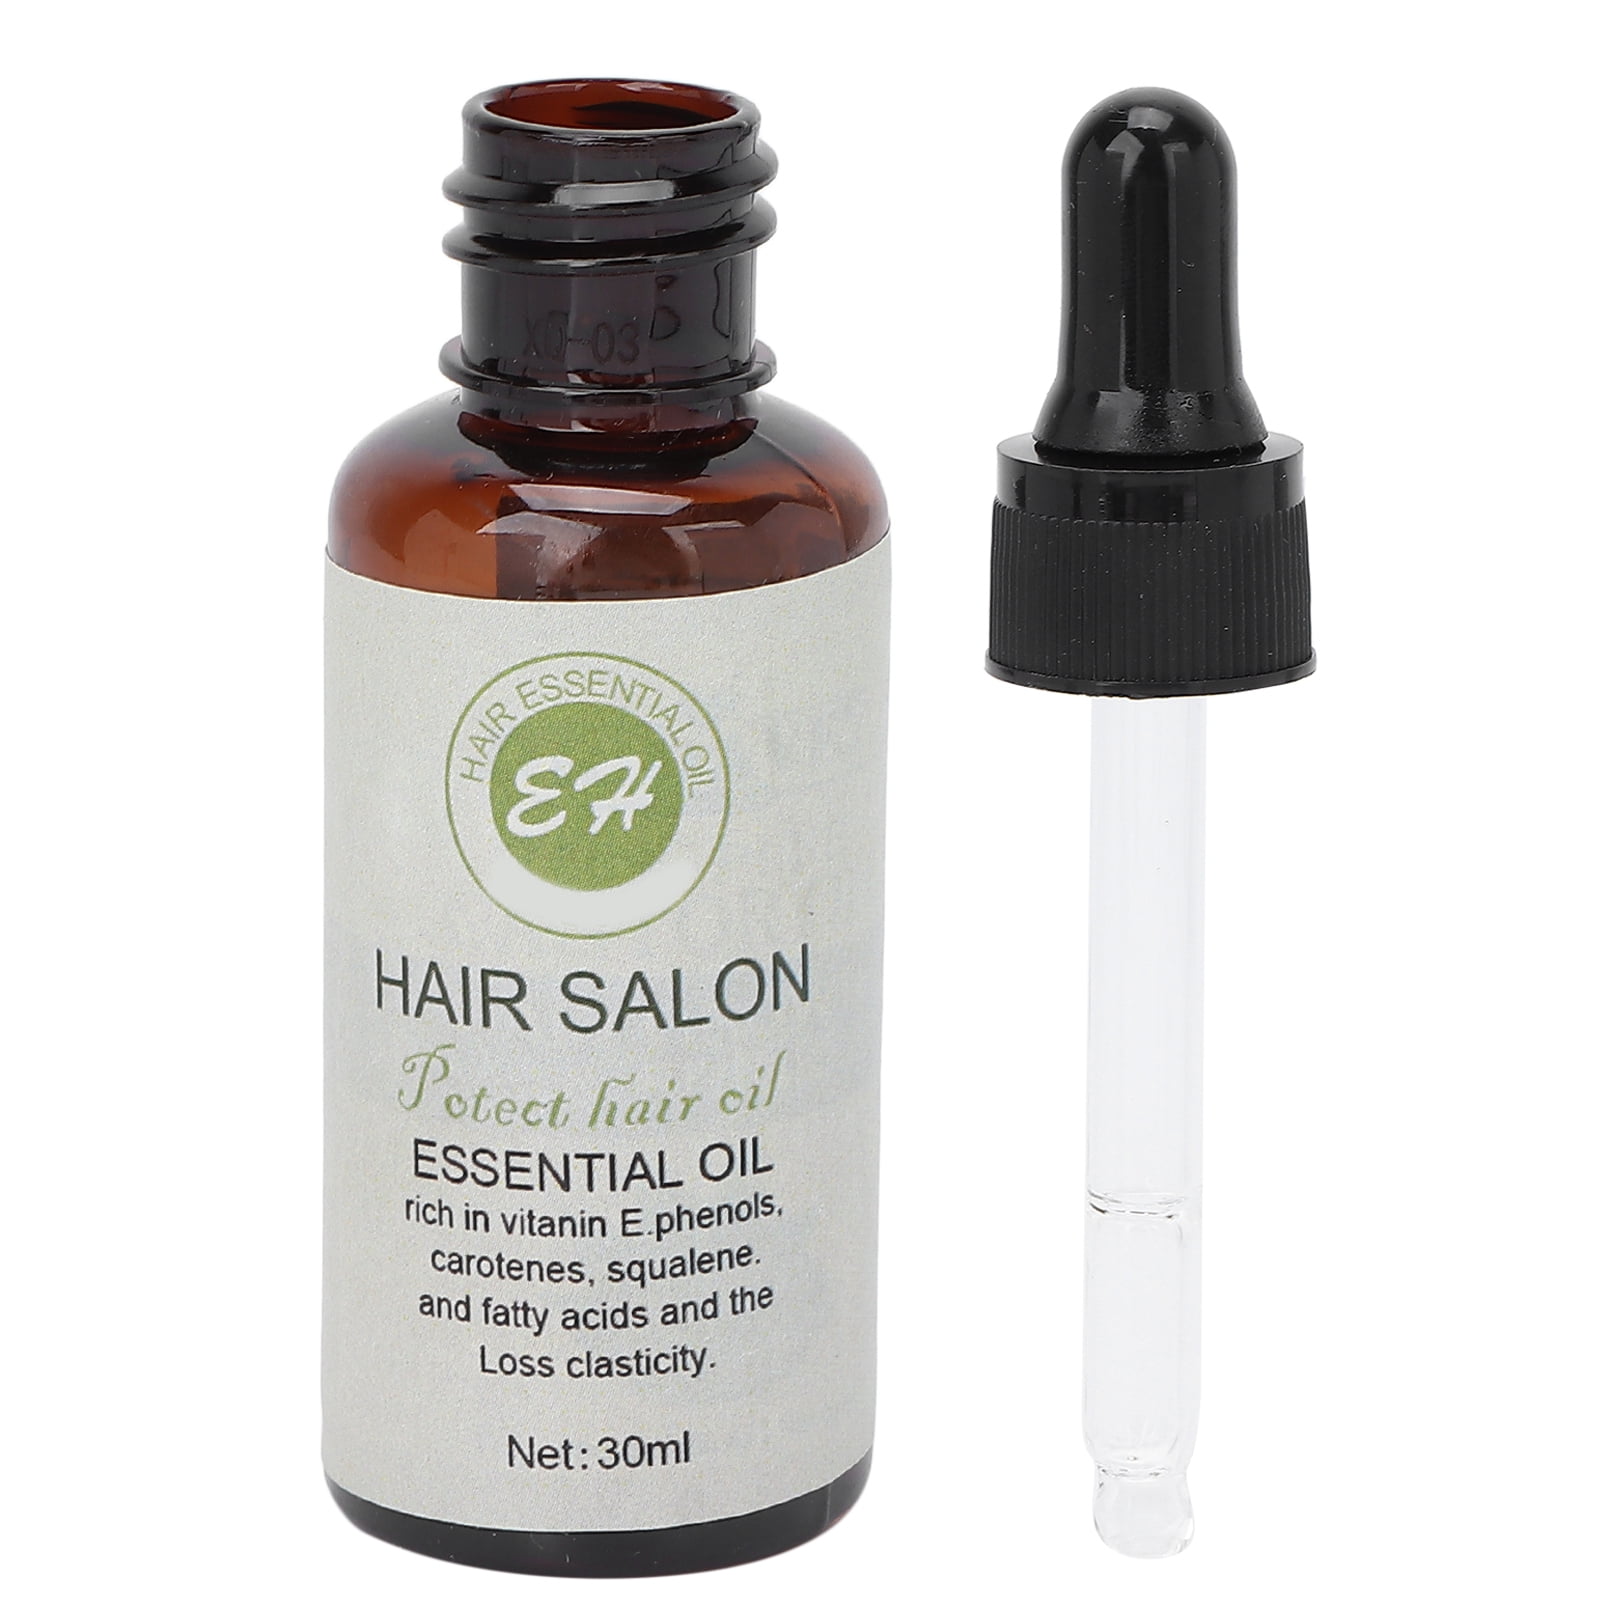 Essentials Oils For Skin And Hair Care – Shoprythm